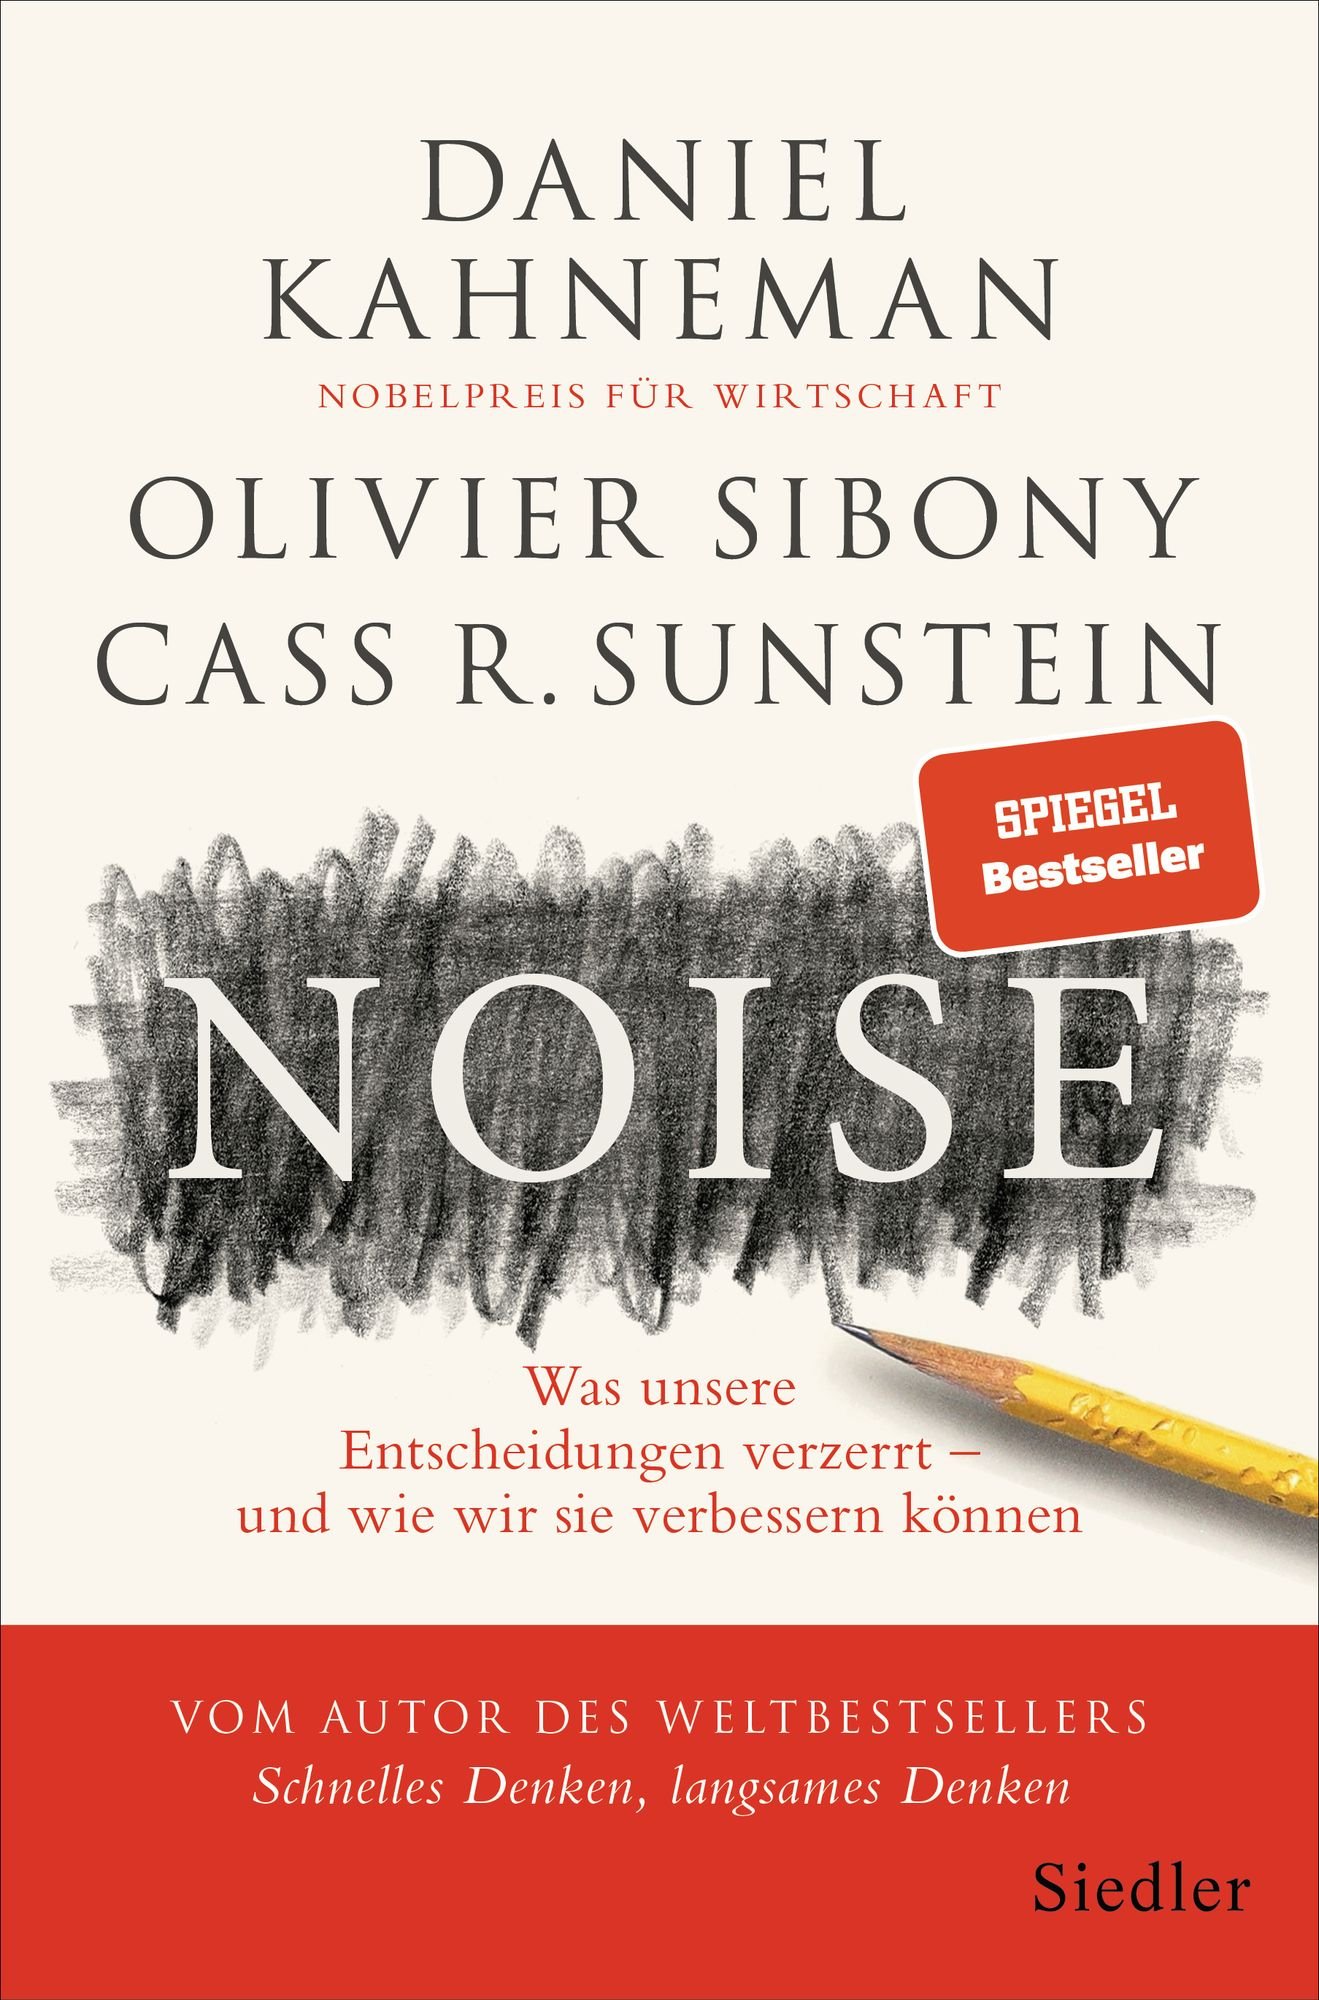 Daniel Kahneman, Cass R. Sunstein, Olivier Sibony: Noise (Paperback, German language, 2021, Siedler)